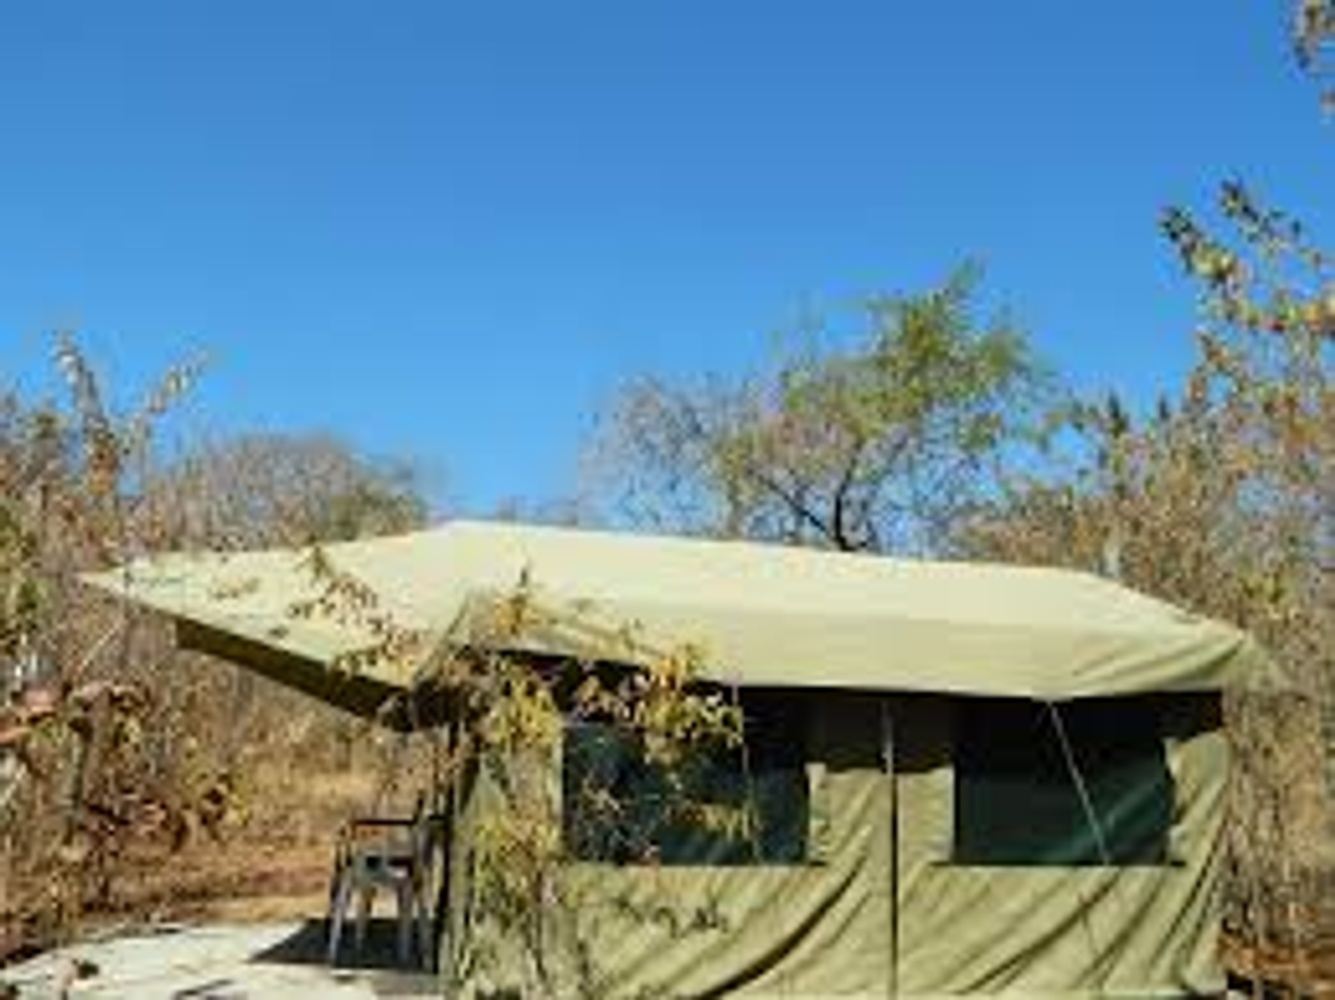 3 Day Chobe Camping Safari